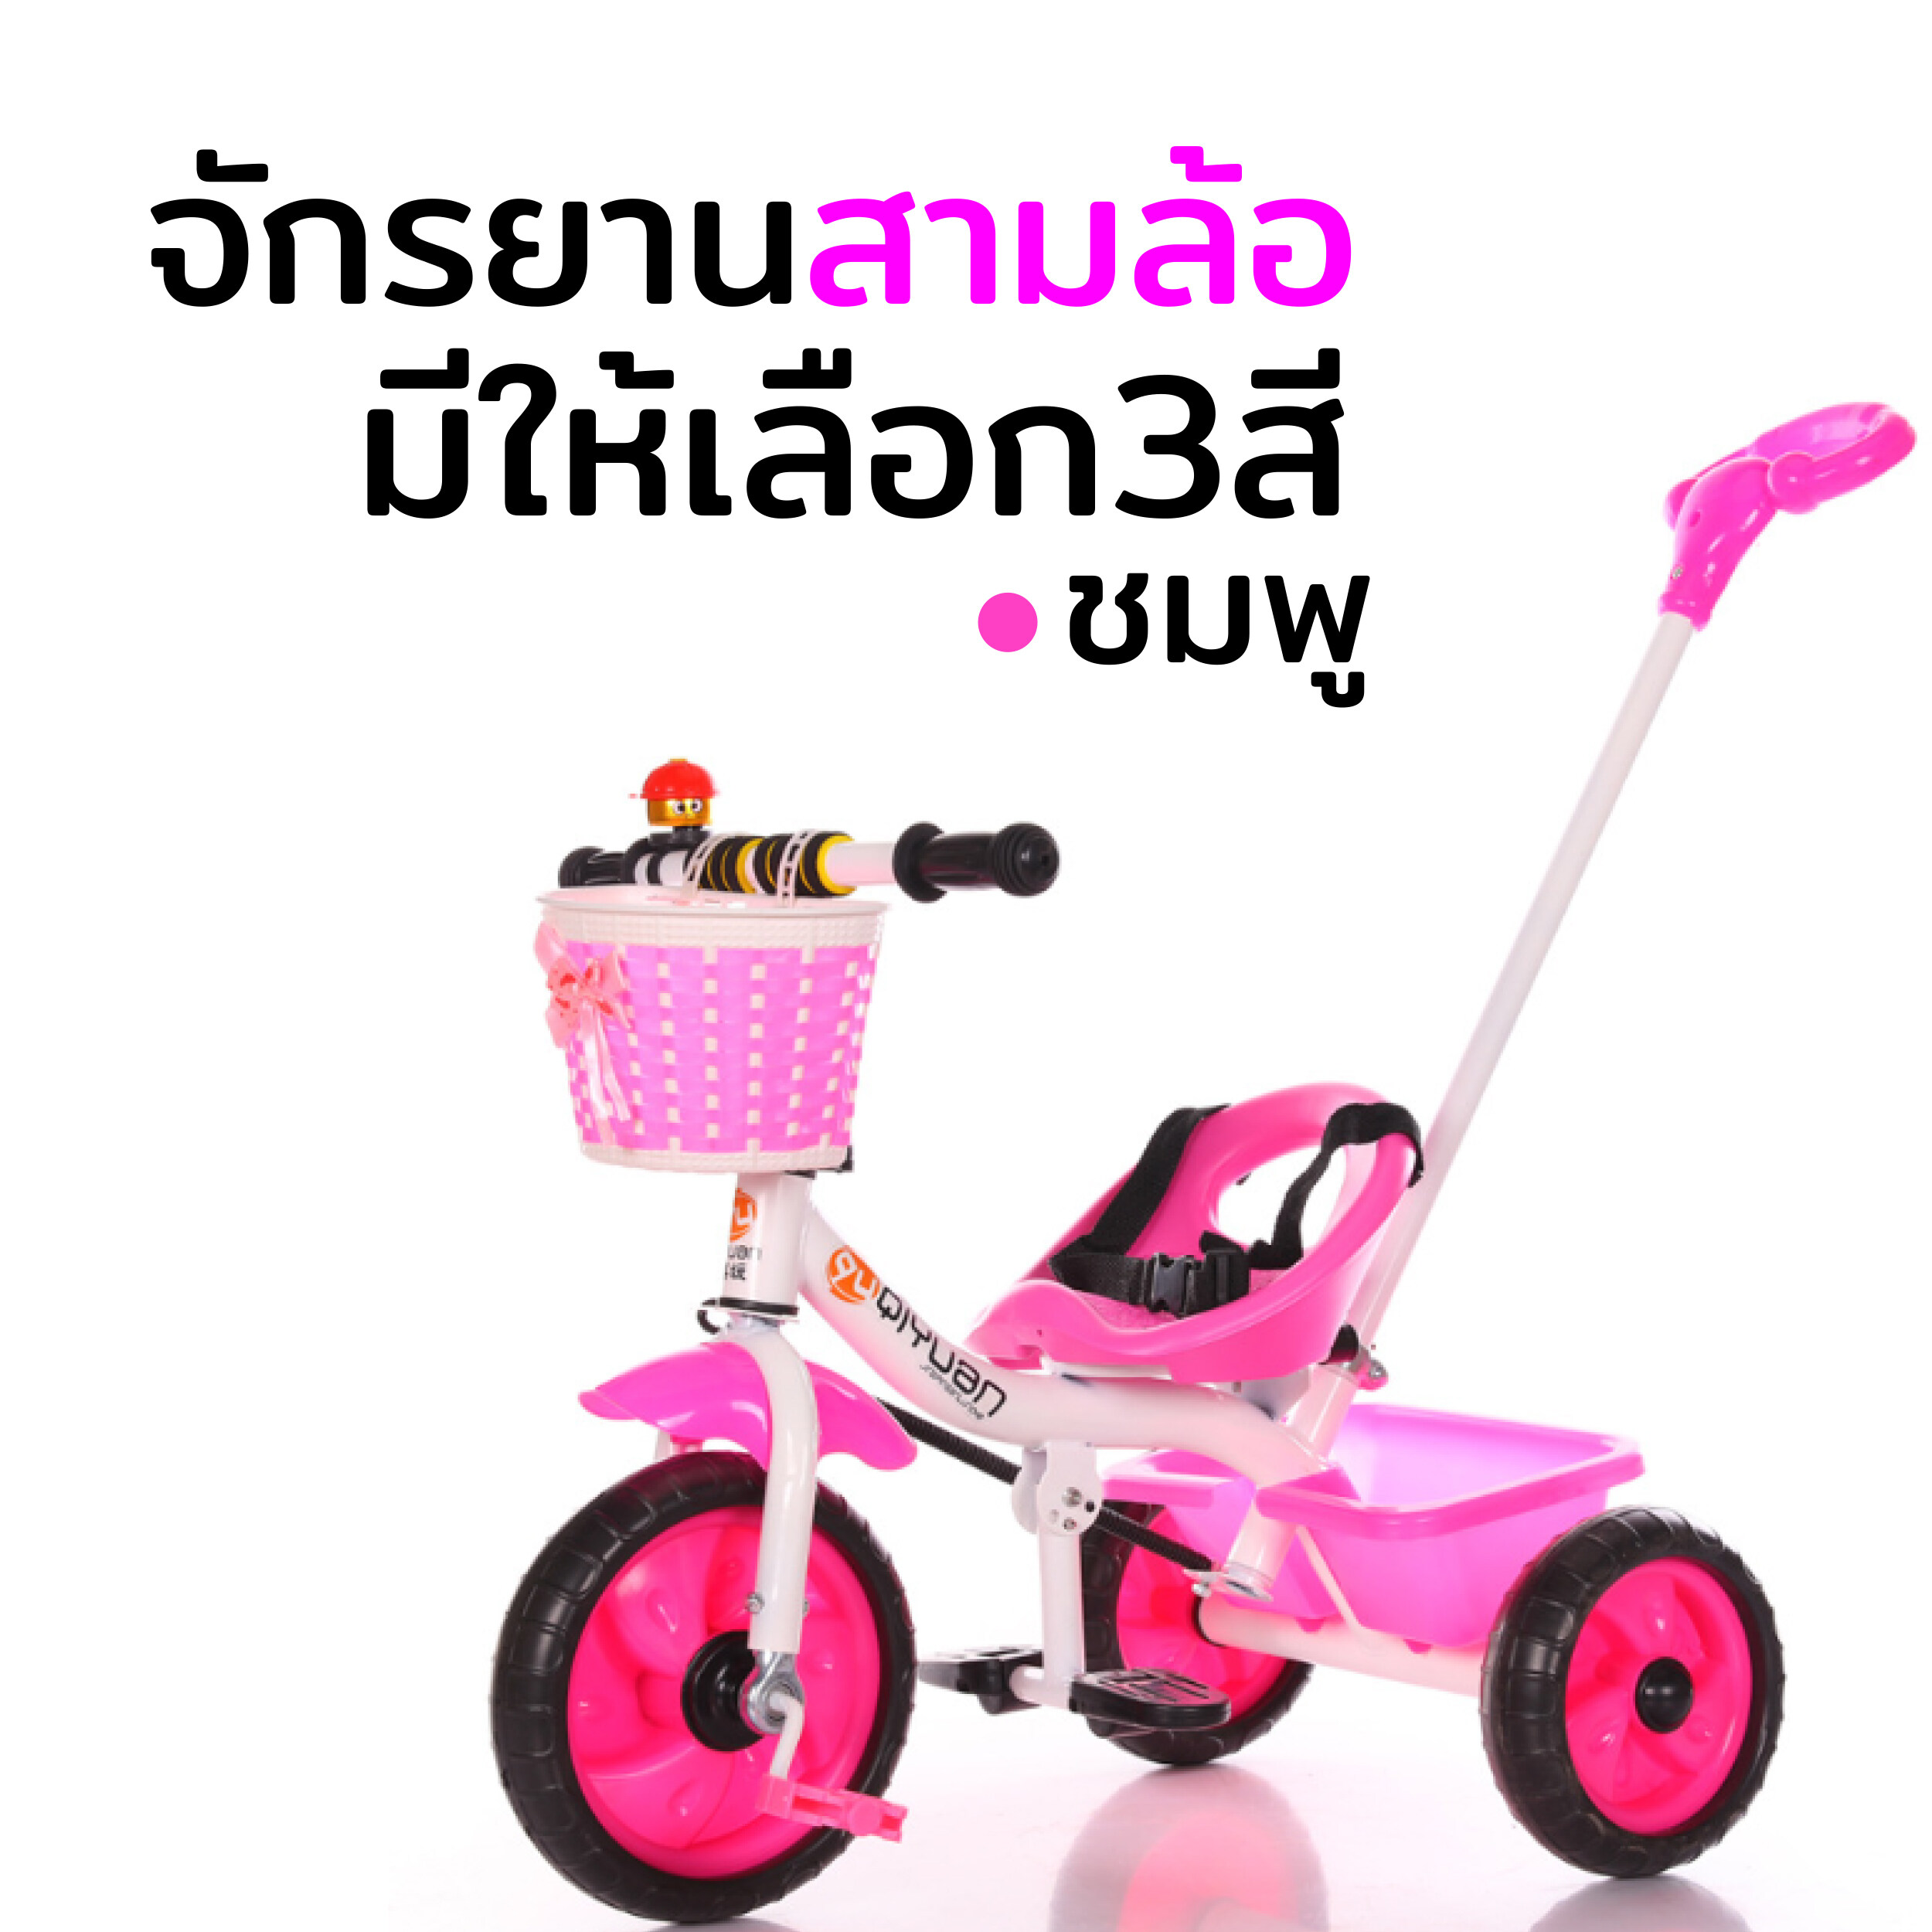 feitaiyang Dee taxt 2020 New ? รถจักรยานเด็ก รถจักรยานเด็ก 3 ล้อ จักรยานเด็ก มีตระกร้าด้านหลัง สำหรับเด็ก 2 ขวบขึ้นไป (สีชมพูสีขาวและสีฟ้า)